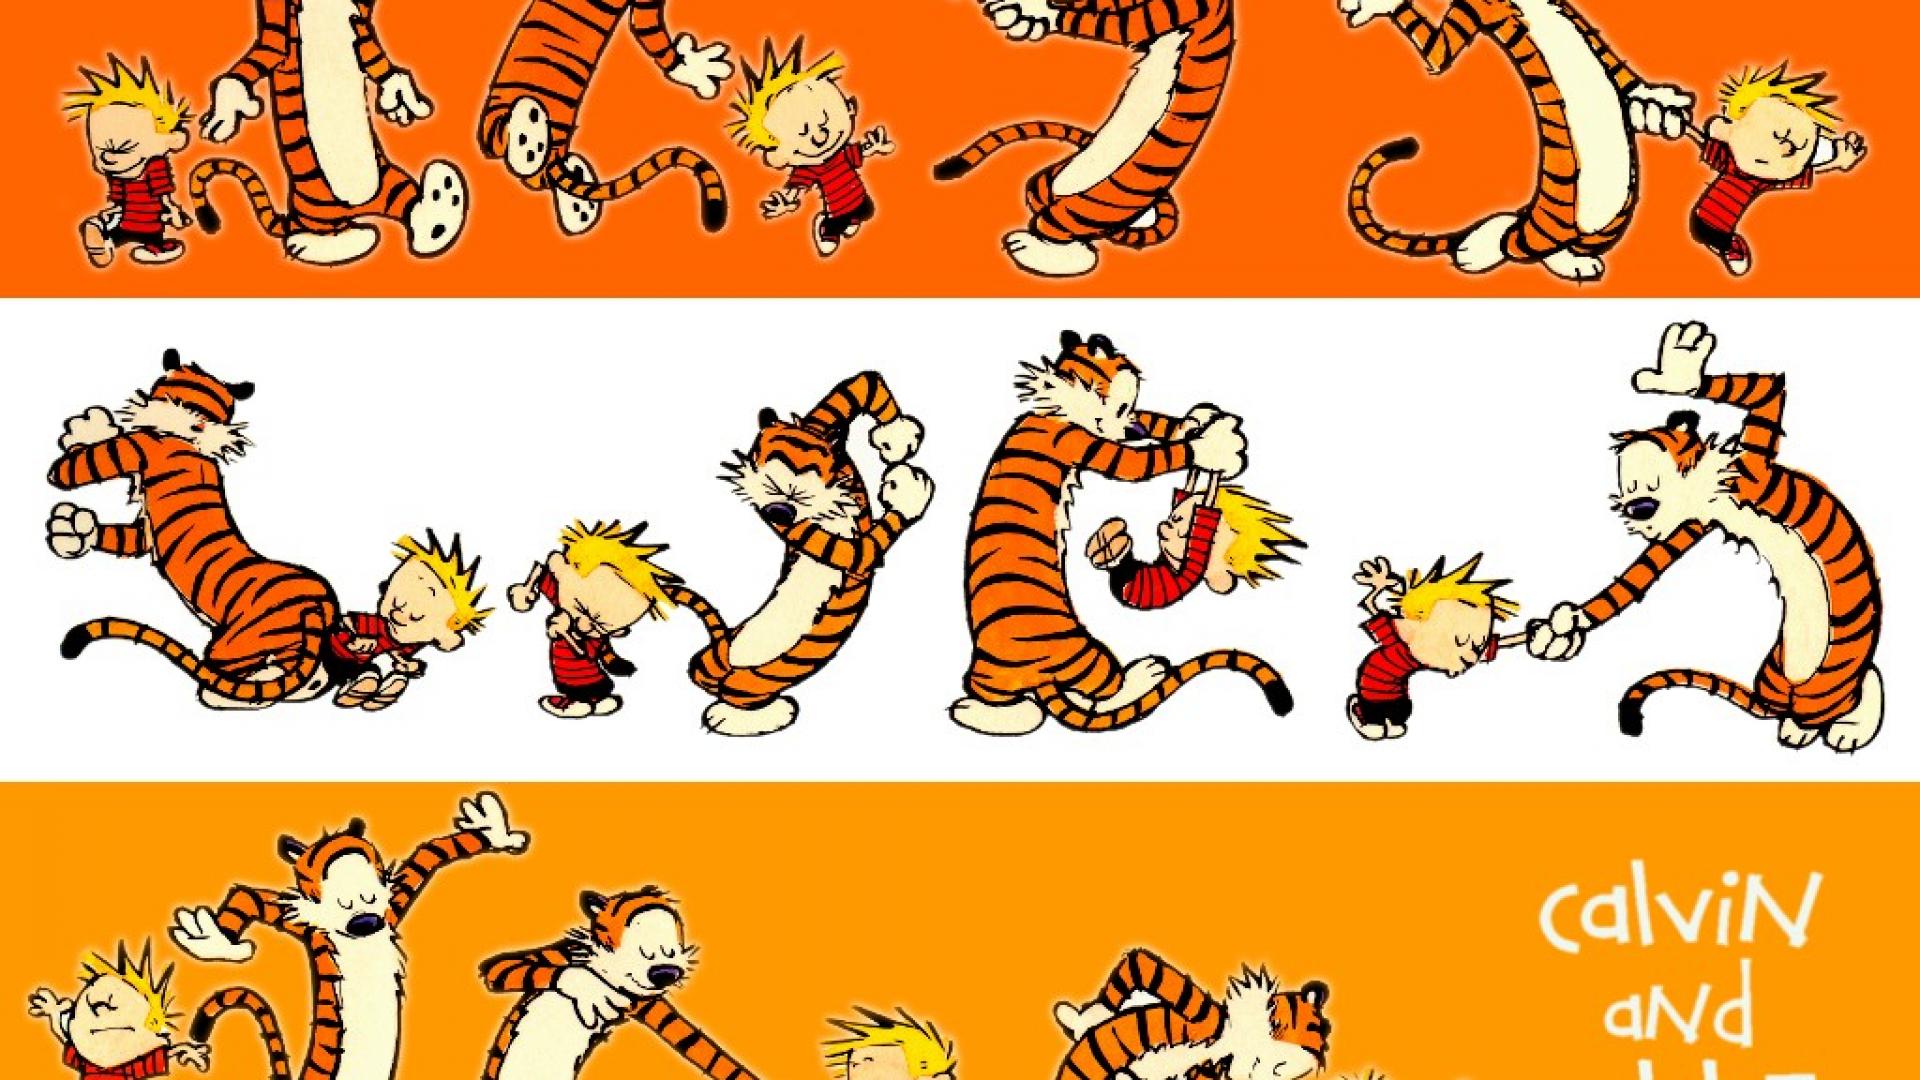 Calvin And Hobbes Wallpaper Hq